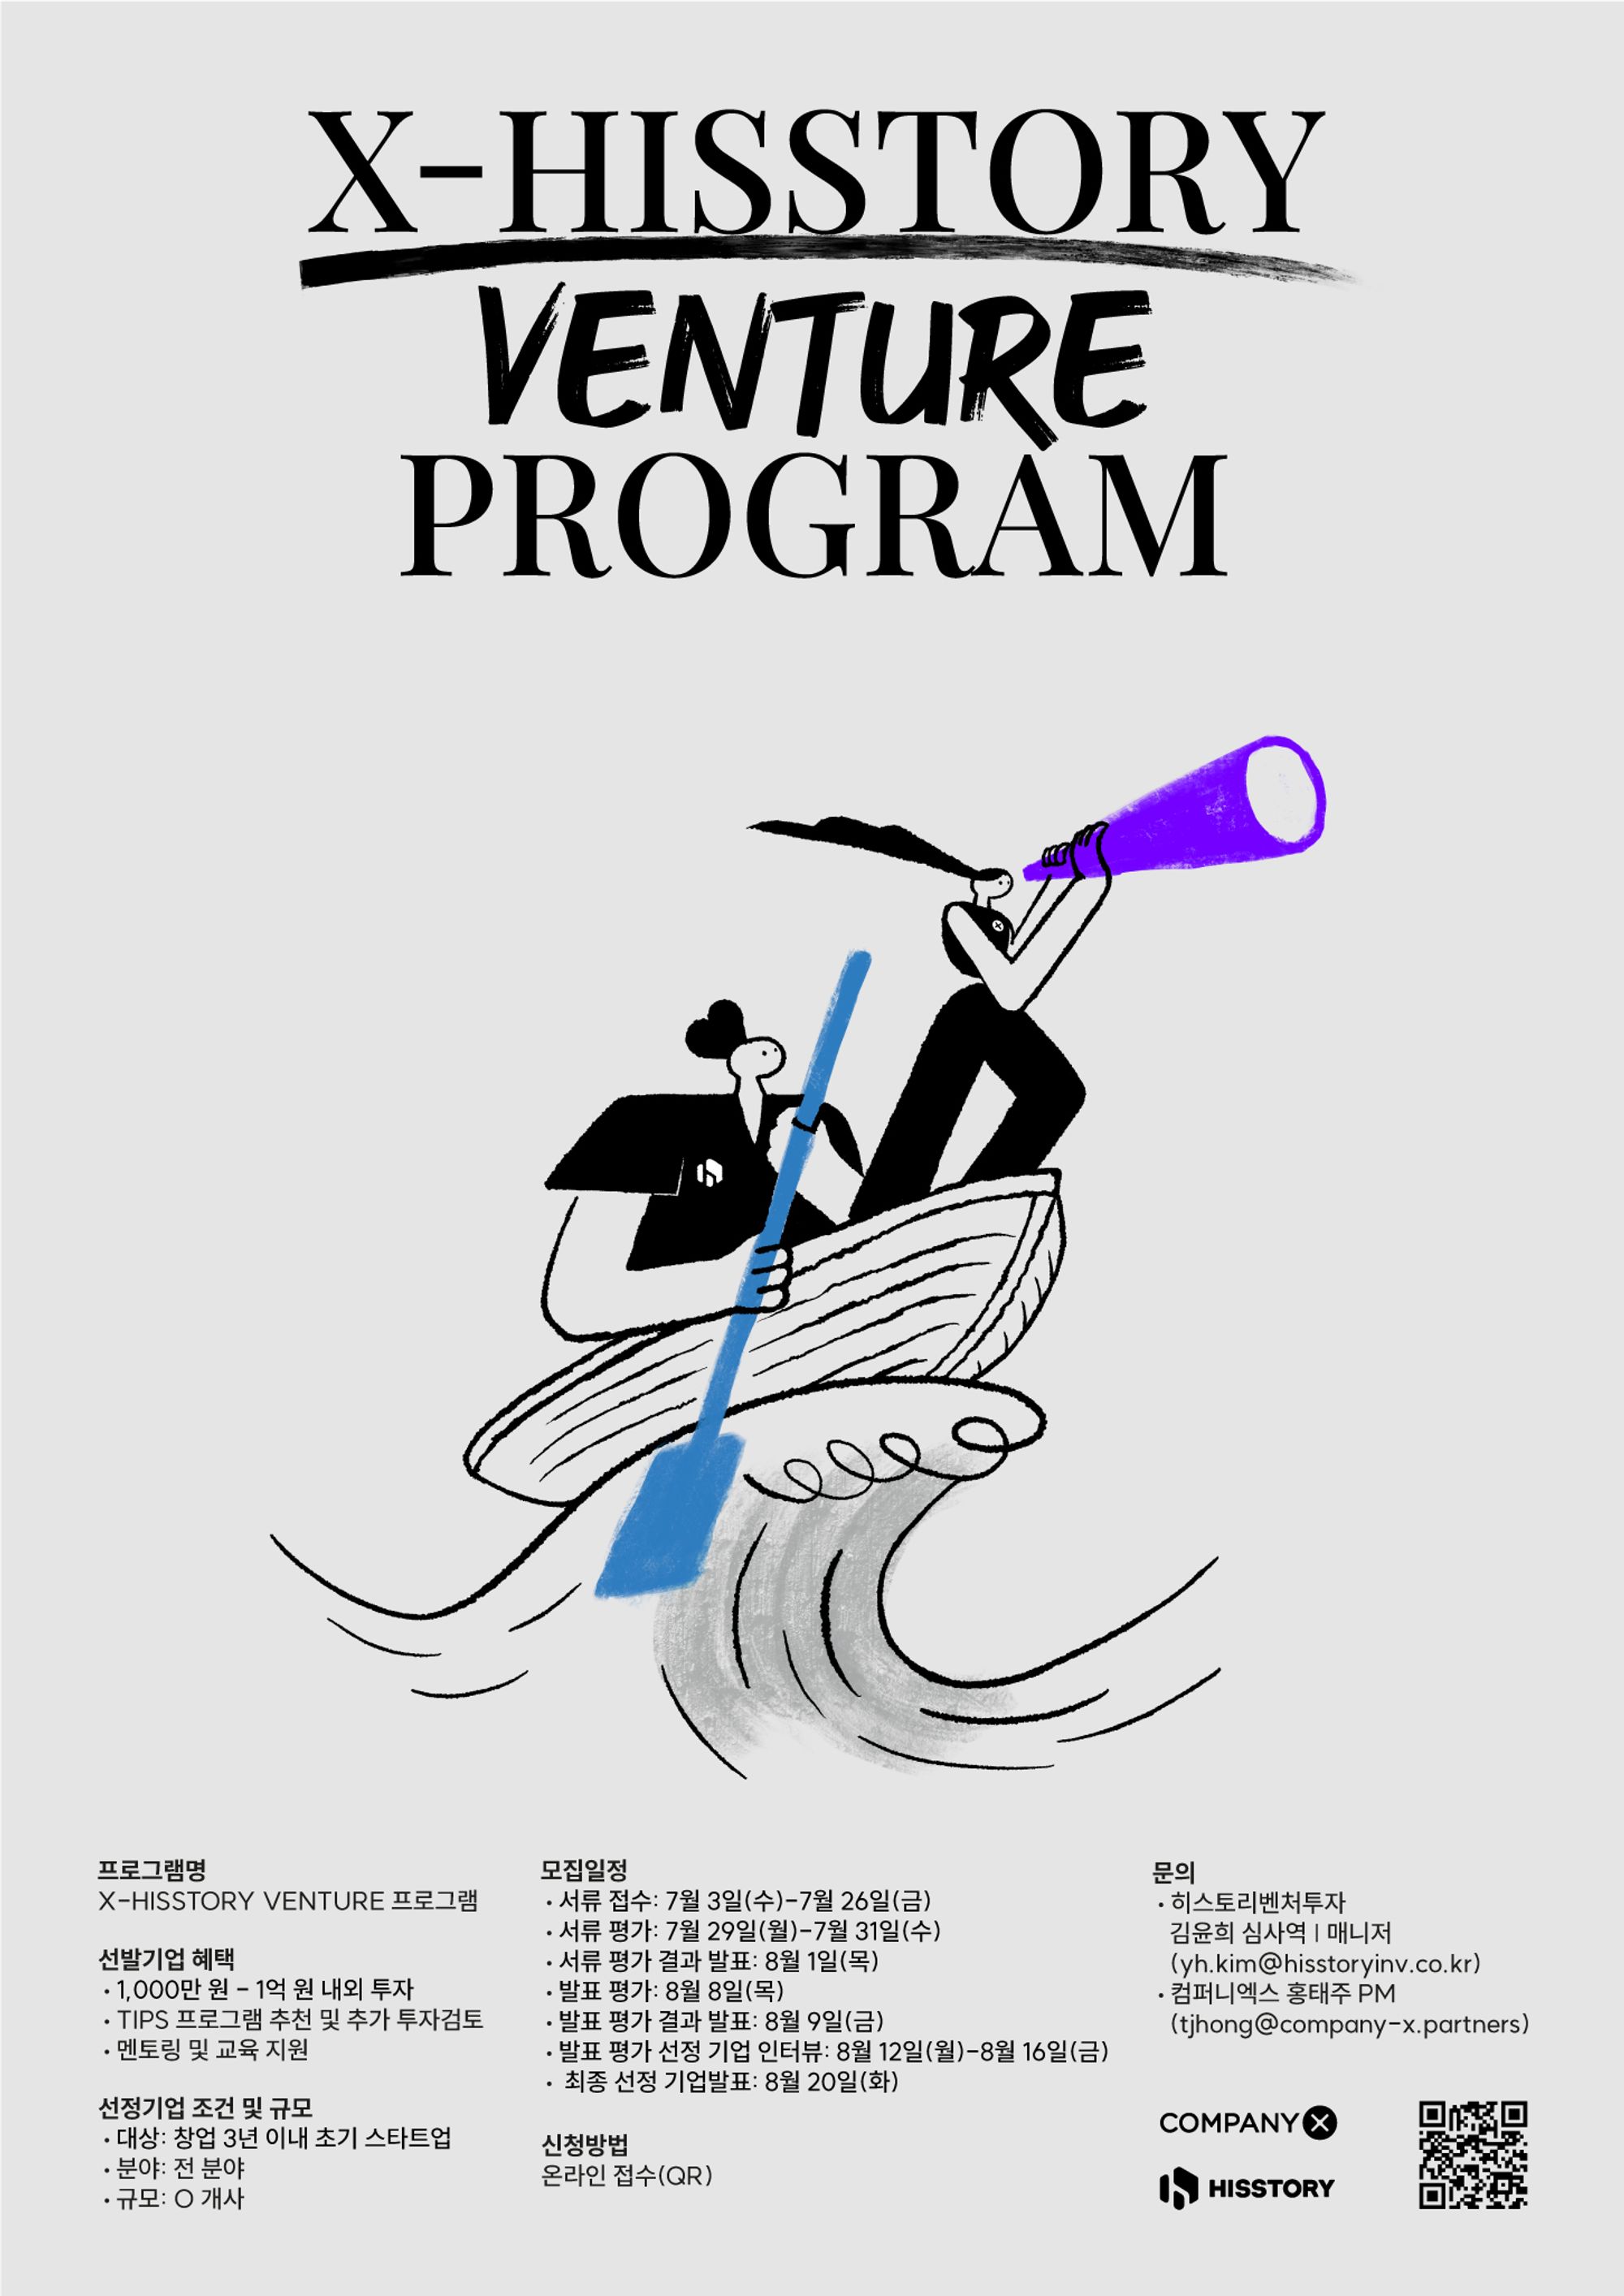 X-HISSTORY VENTURE PROGRAM 참여 스타트업 모집